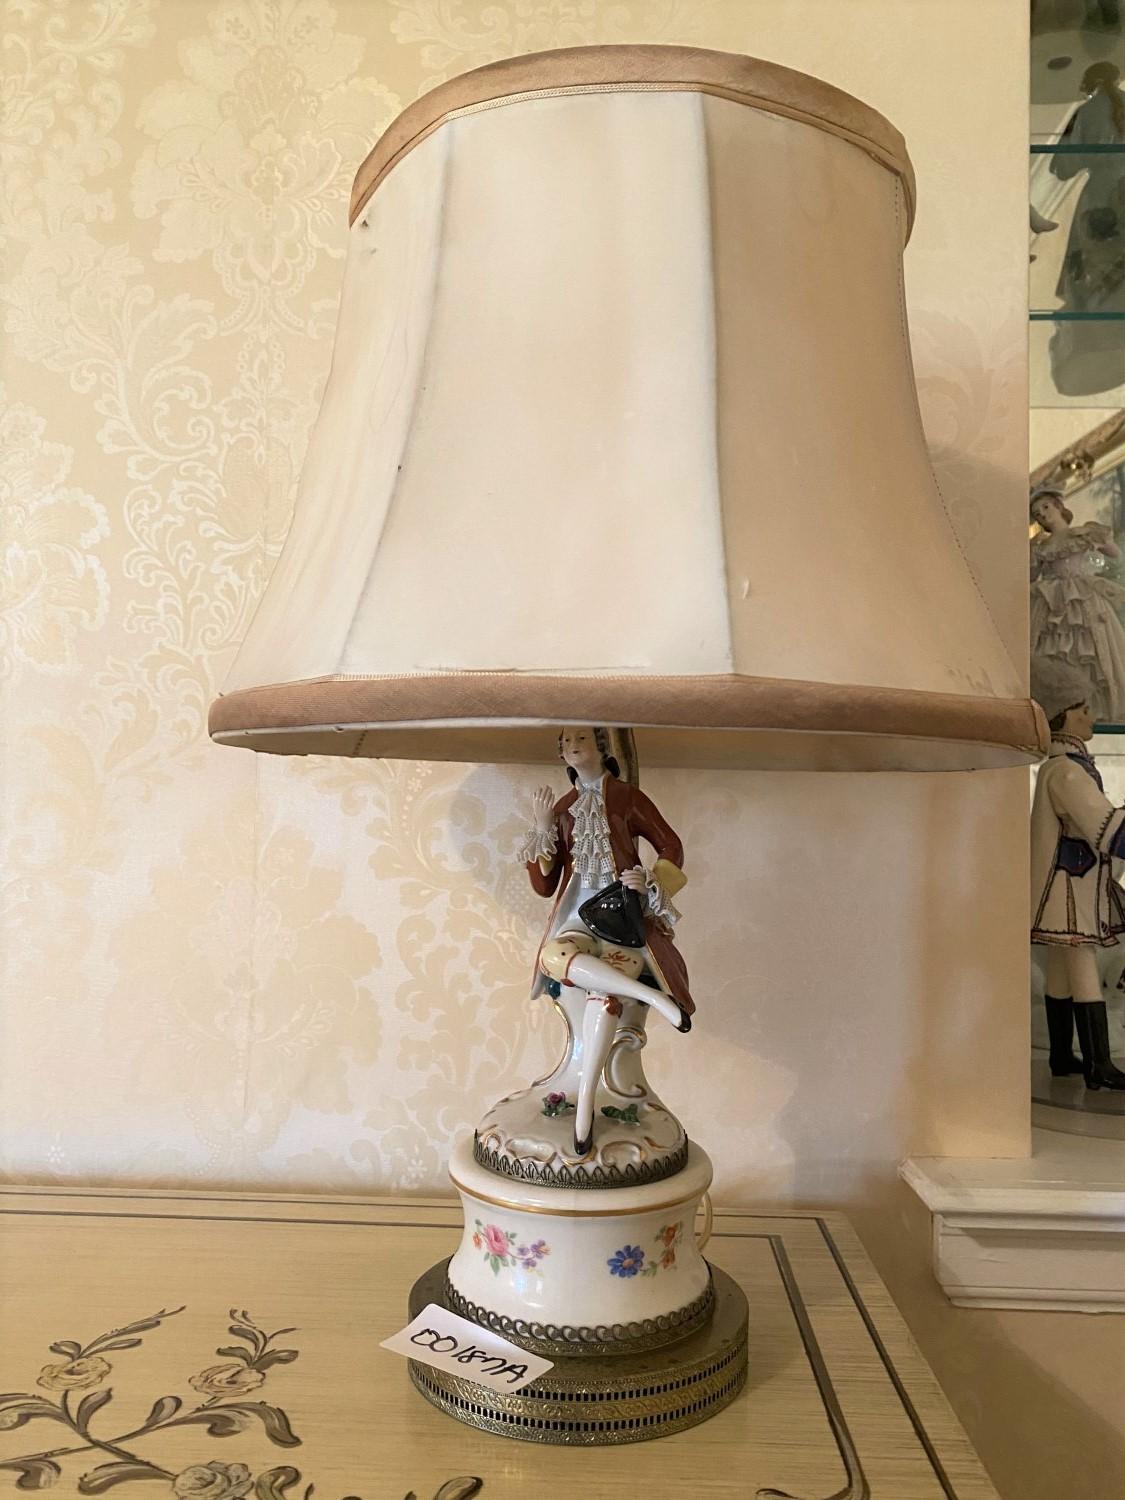 Vintage Lamp with ceramic base